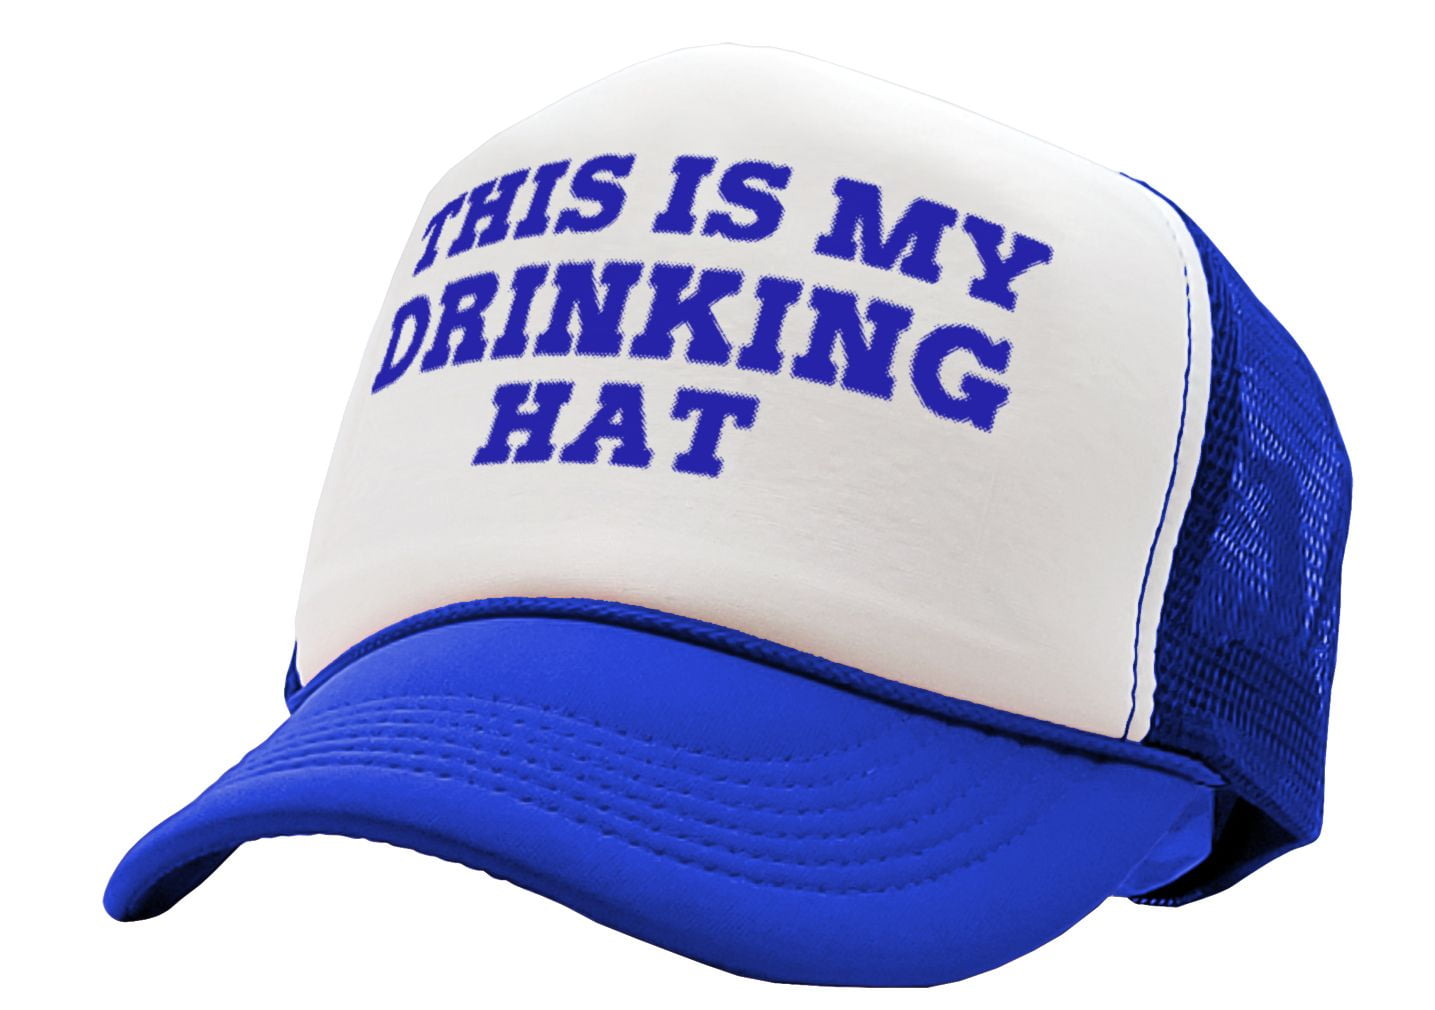 Drinking hat